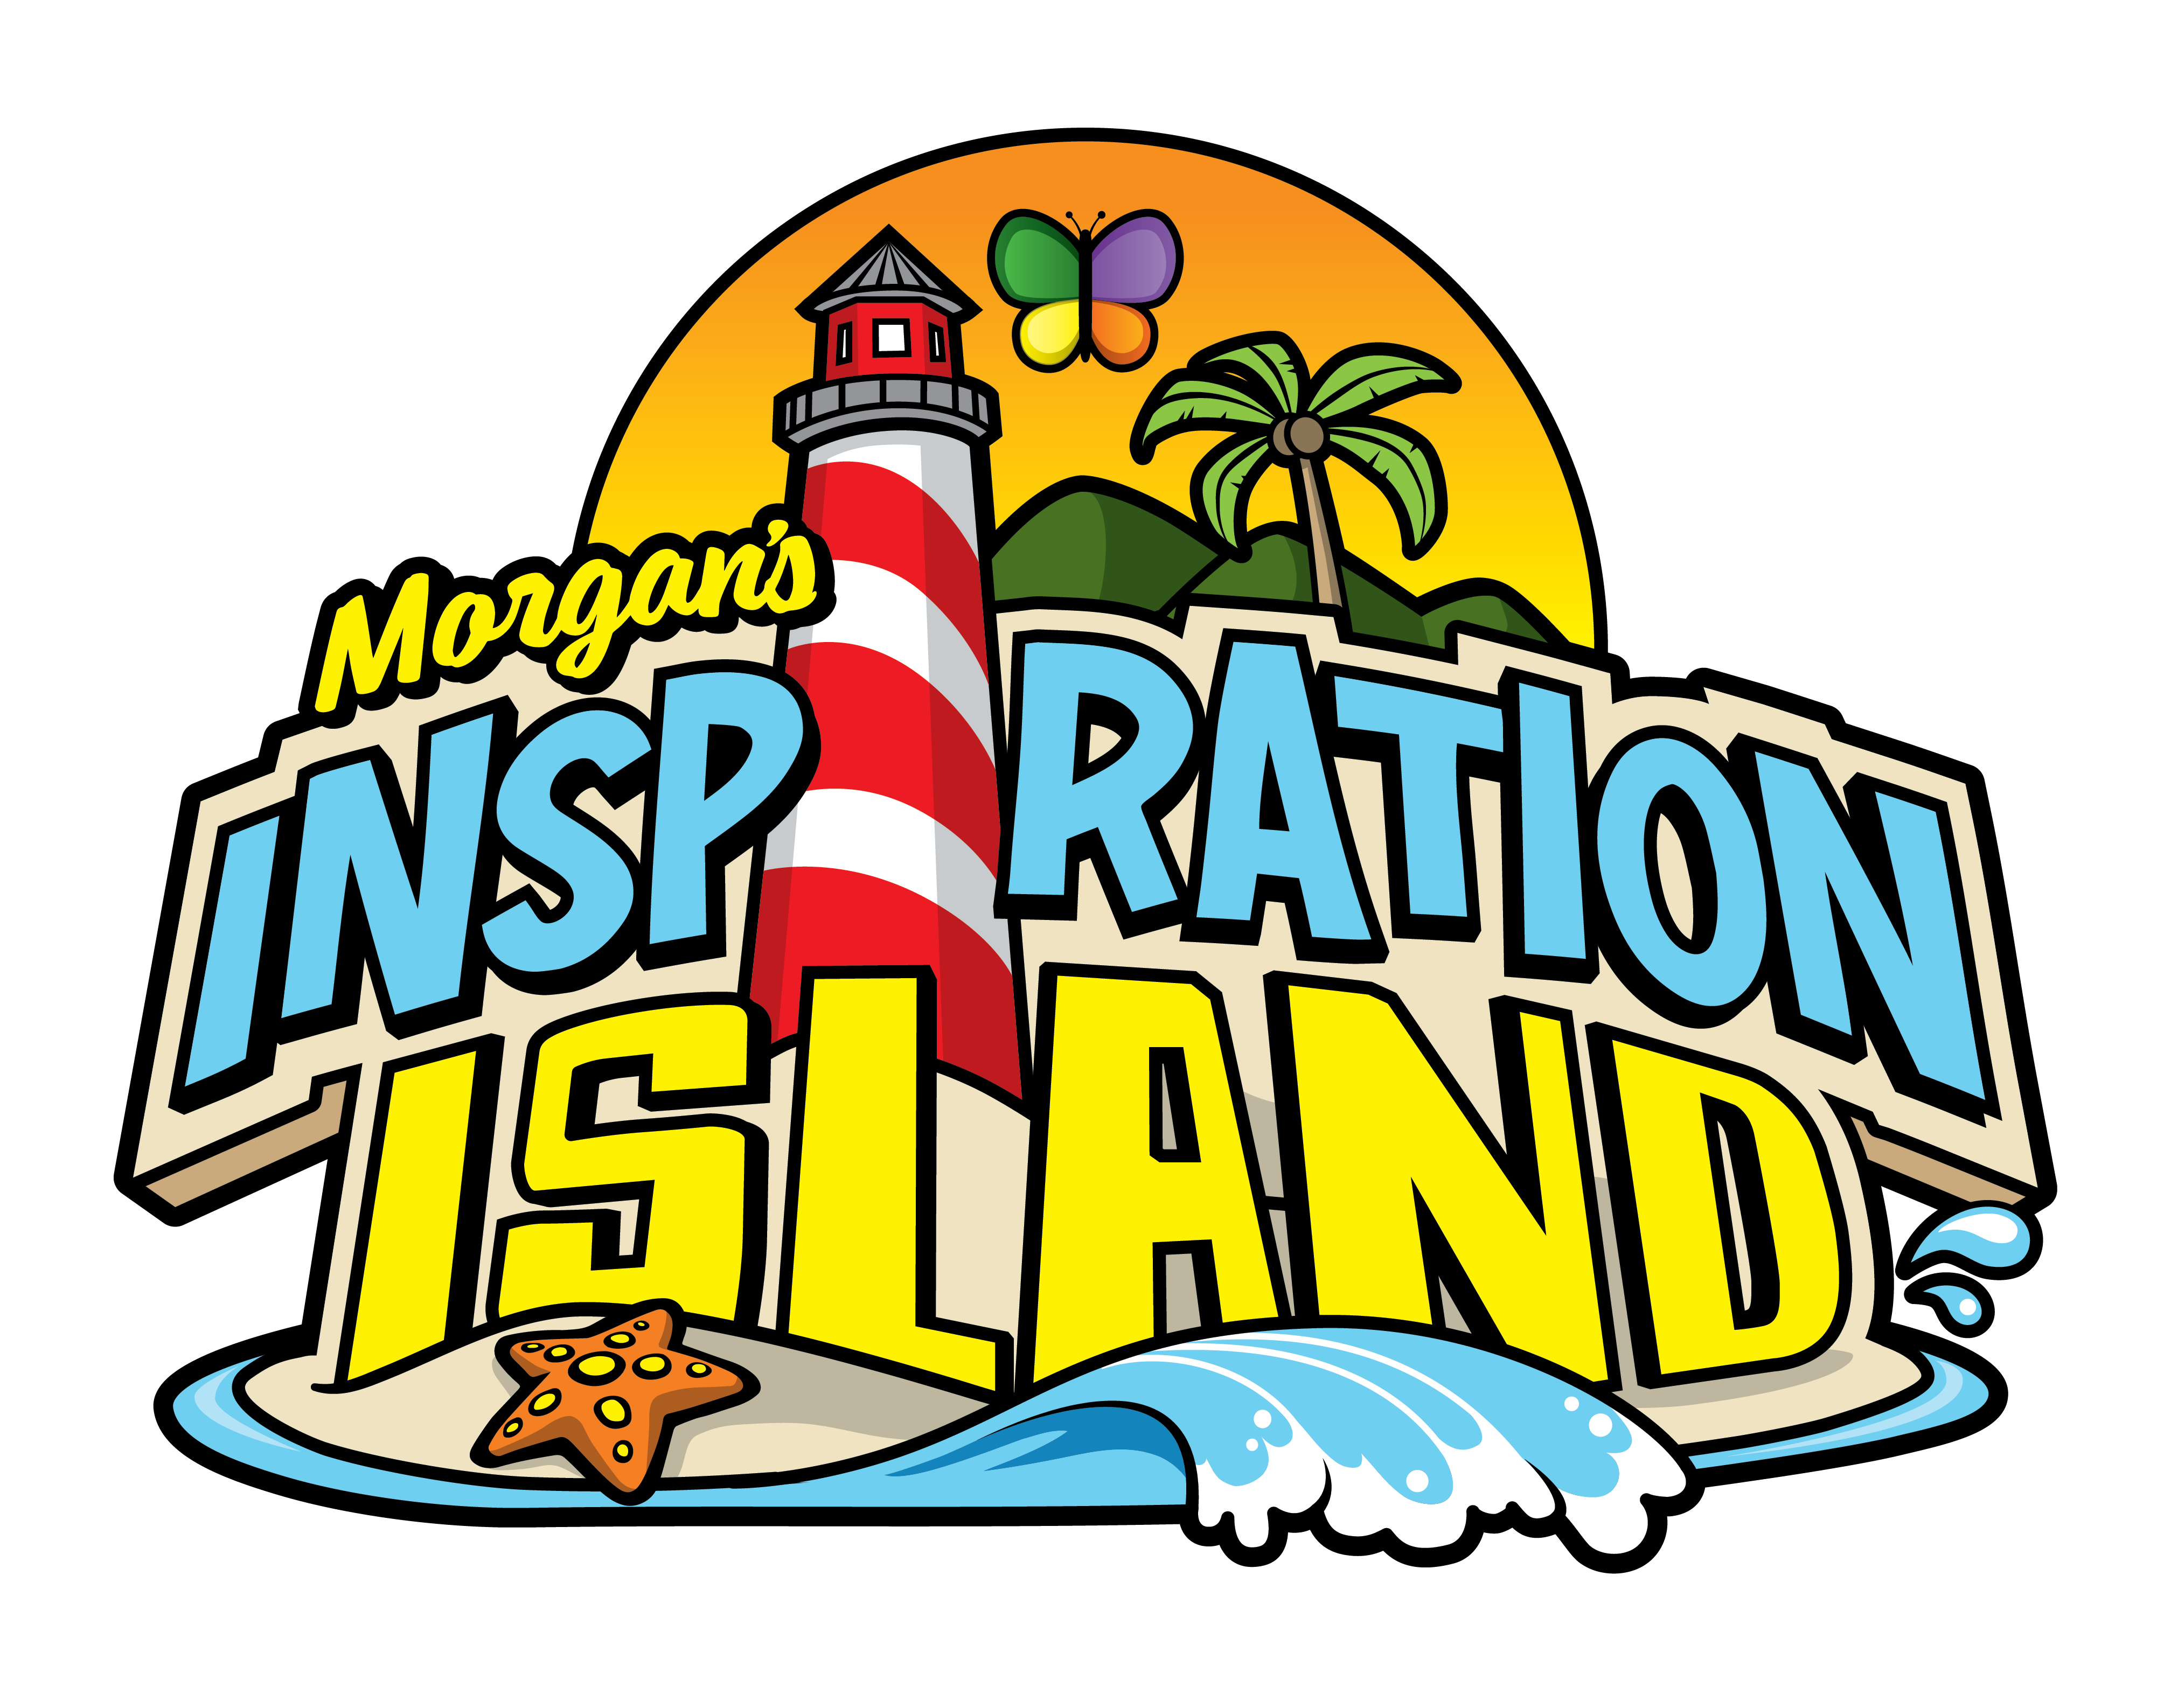 Morgan_s-Inspiration-Island.png